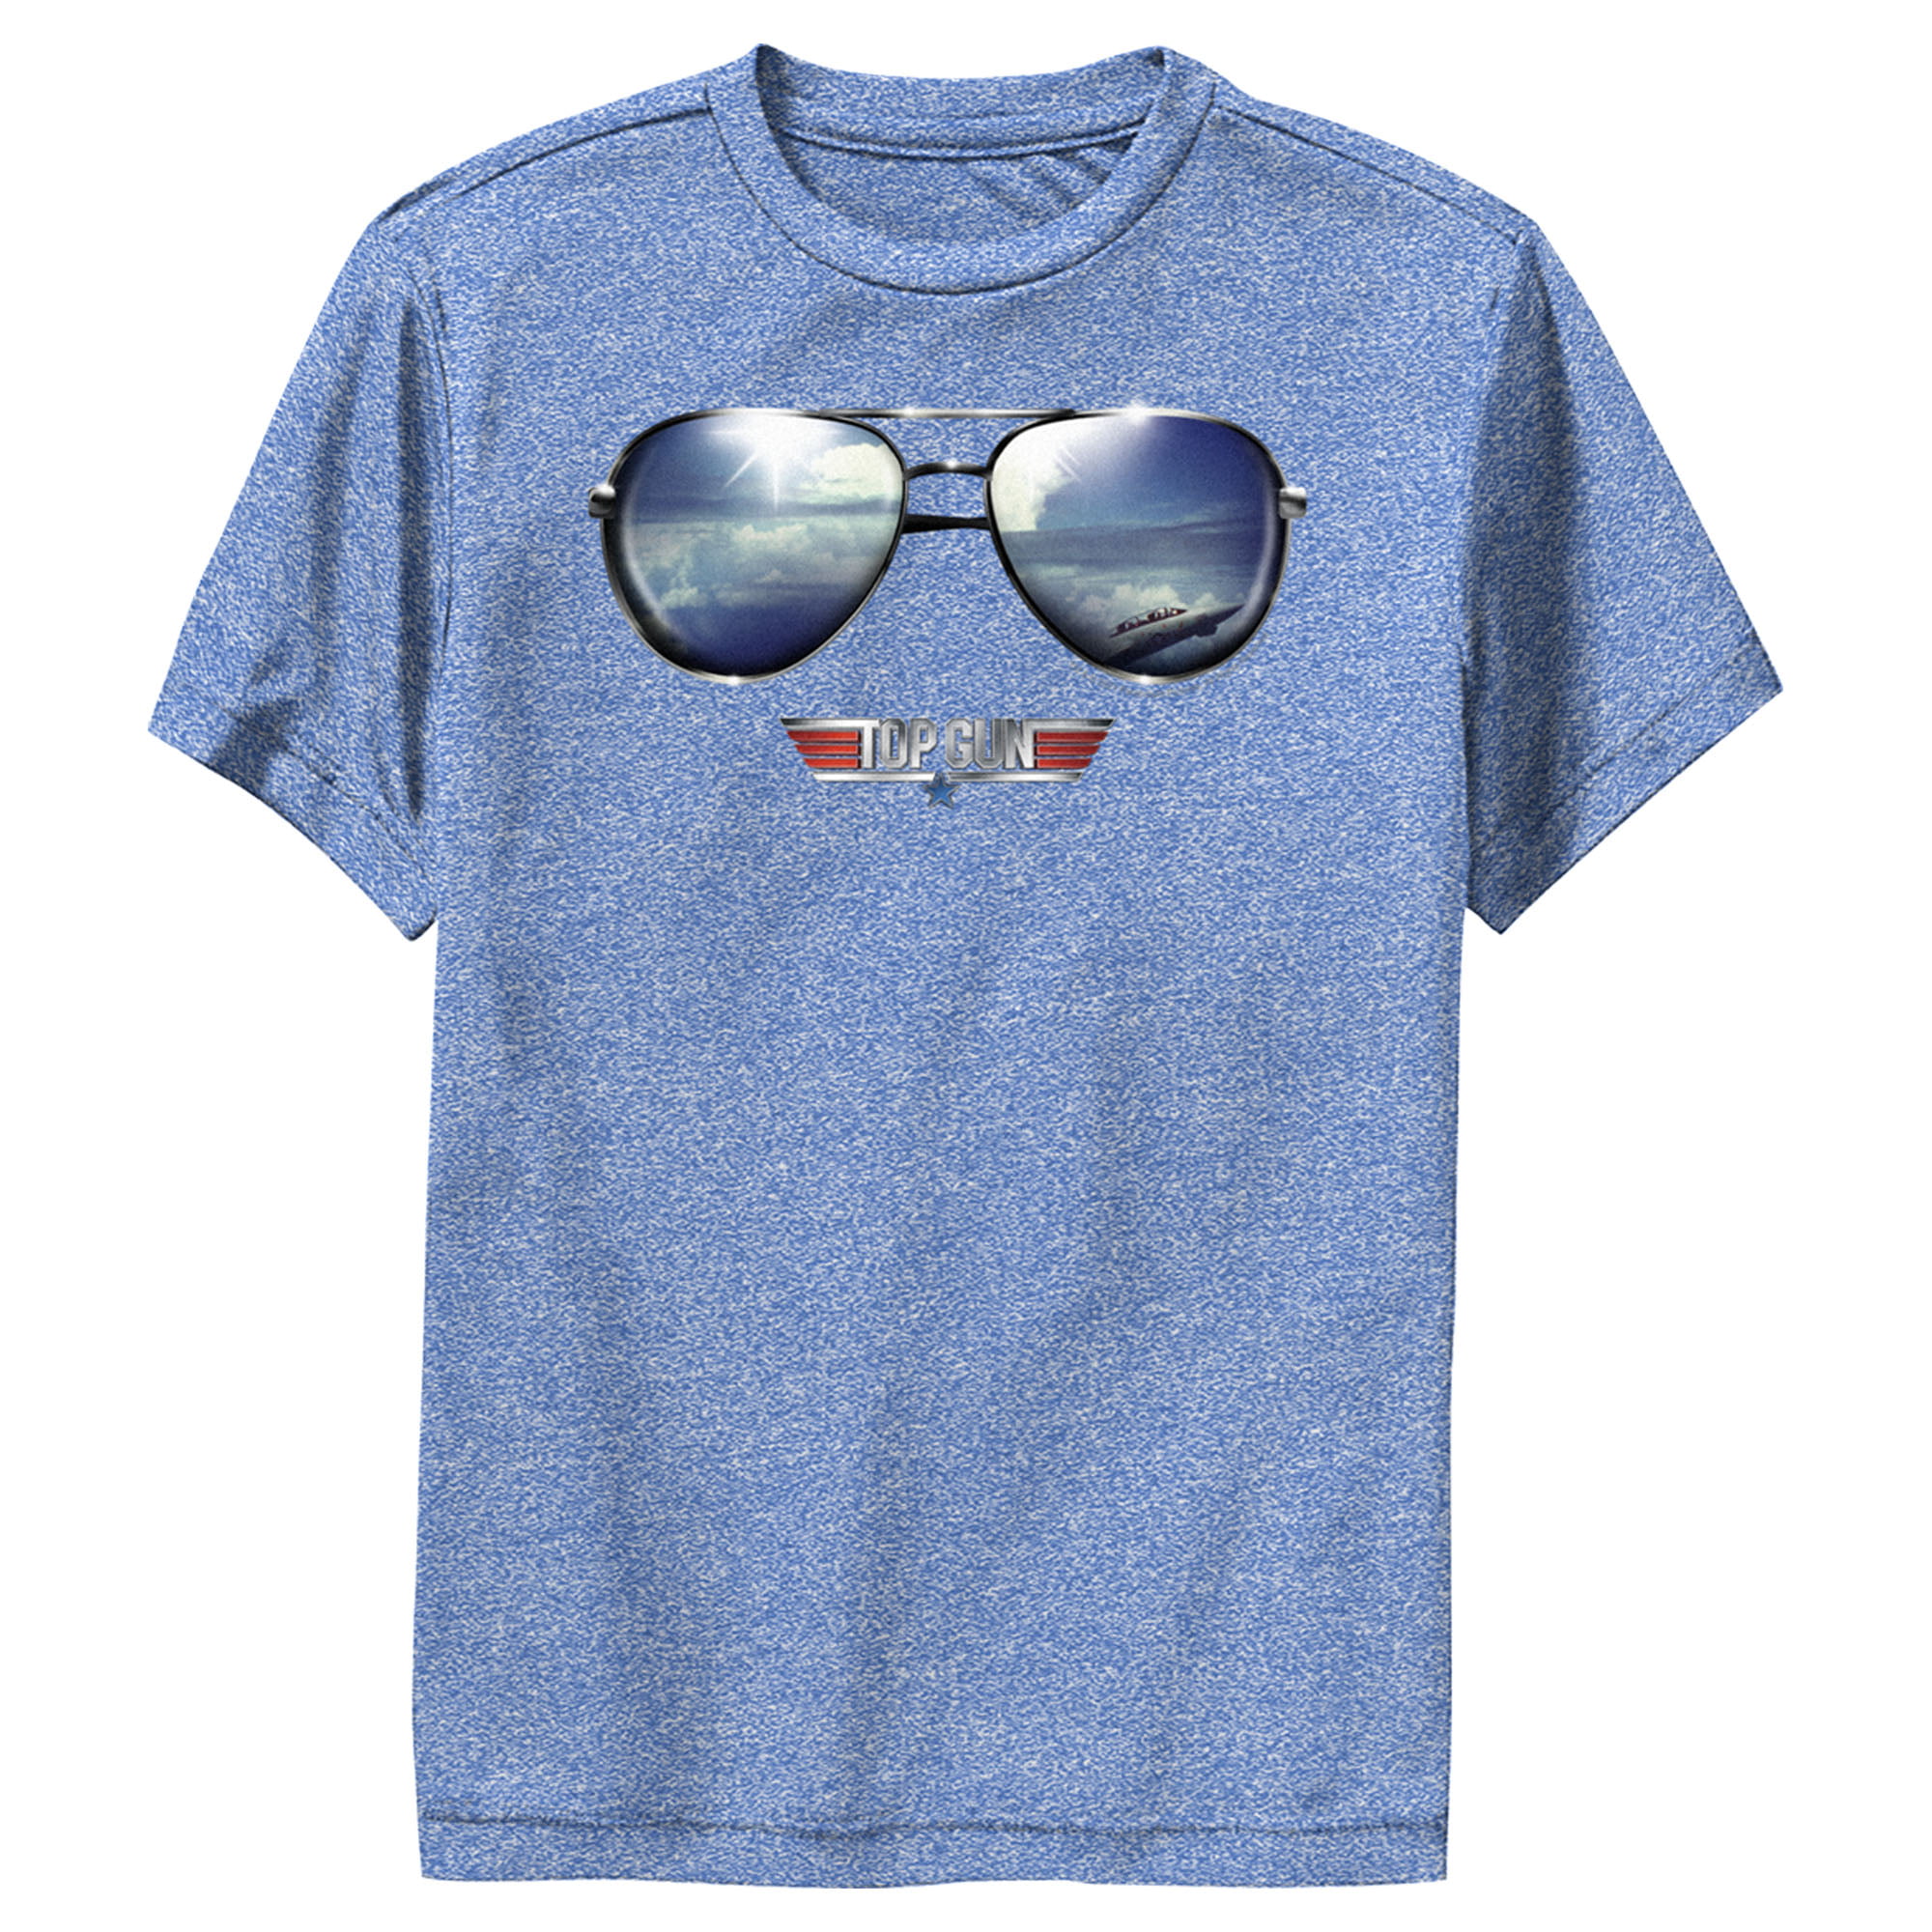 Boy\'s Top Gun Aviator Sunglasses Reflection Logo Performance Graphic Tee  Royal Blue Heather Large